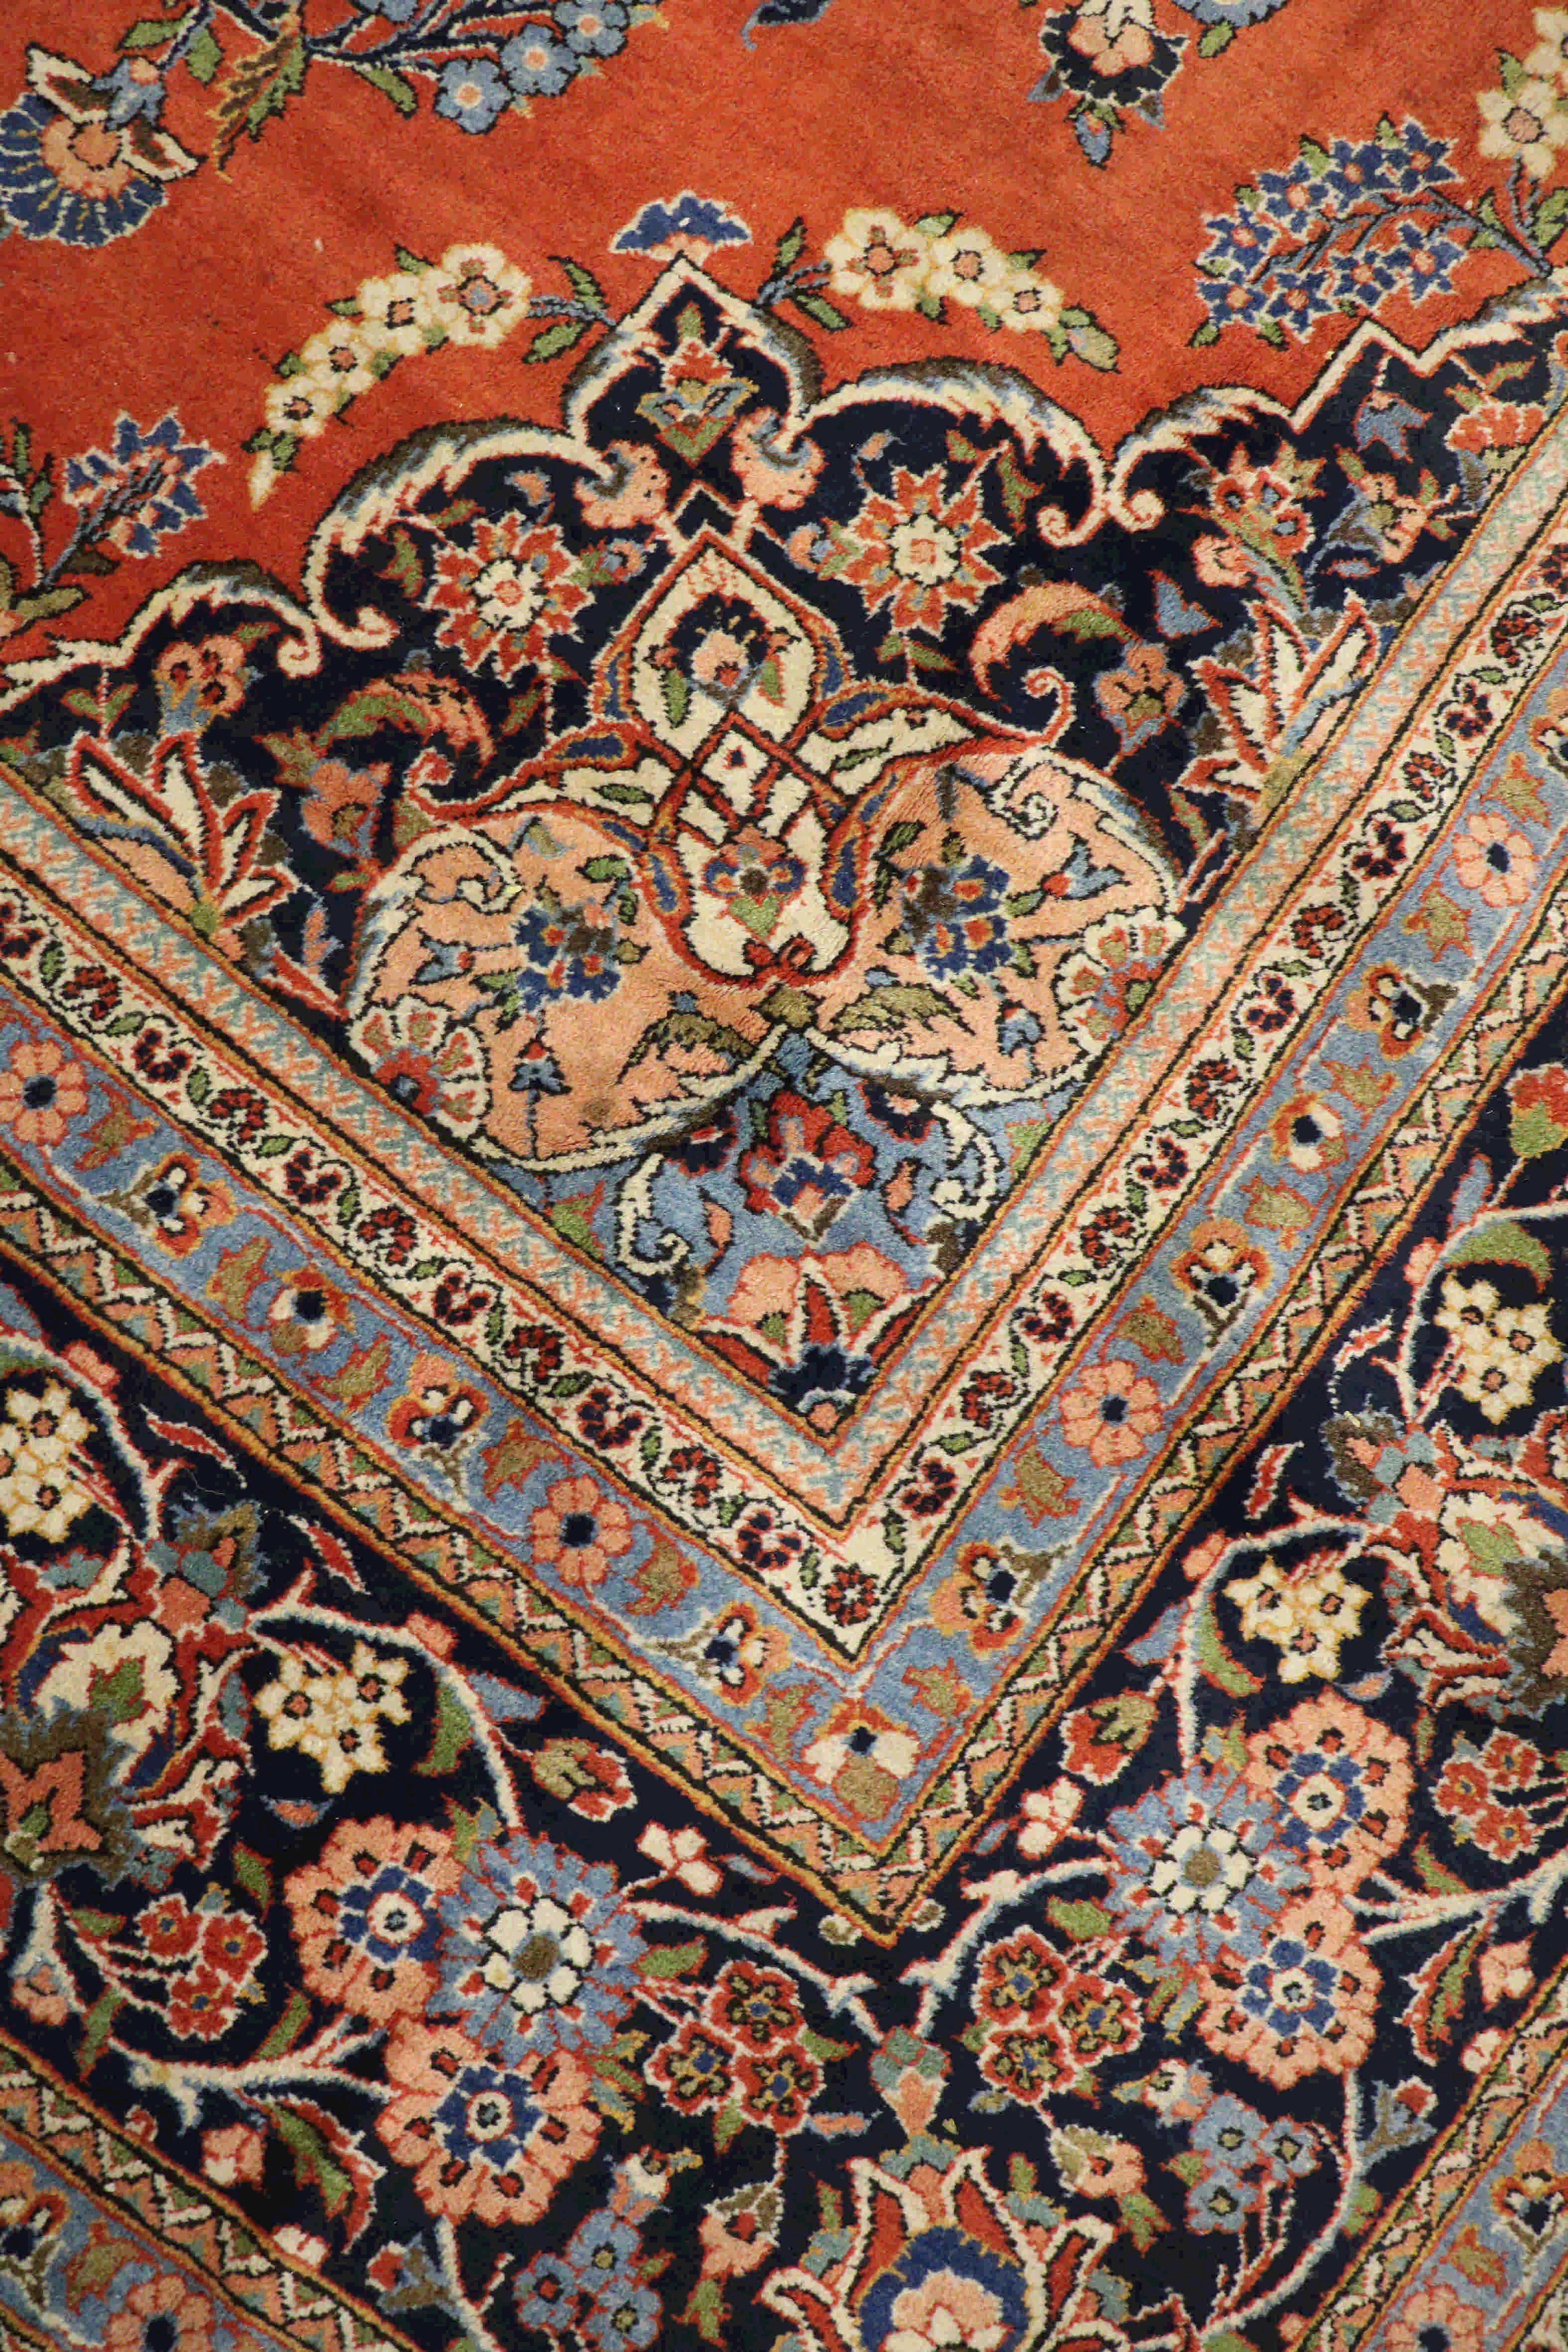 Intricate border design on a persian kashan rug